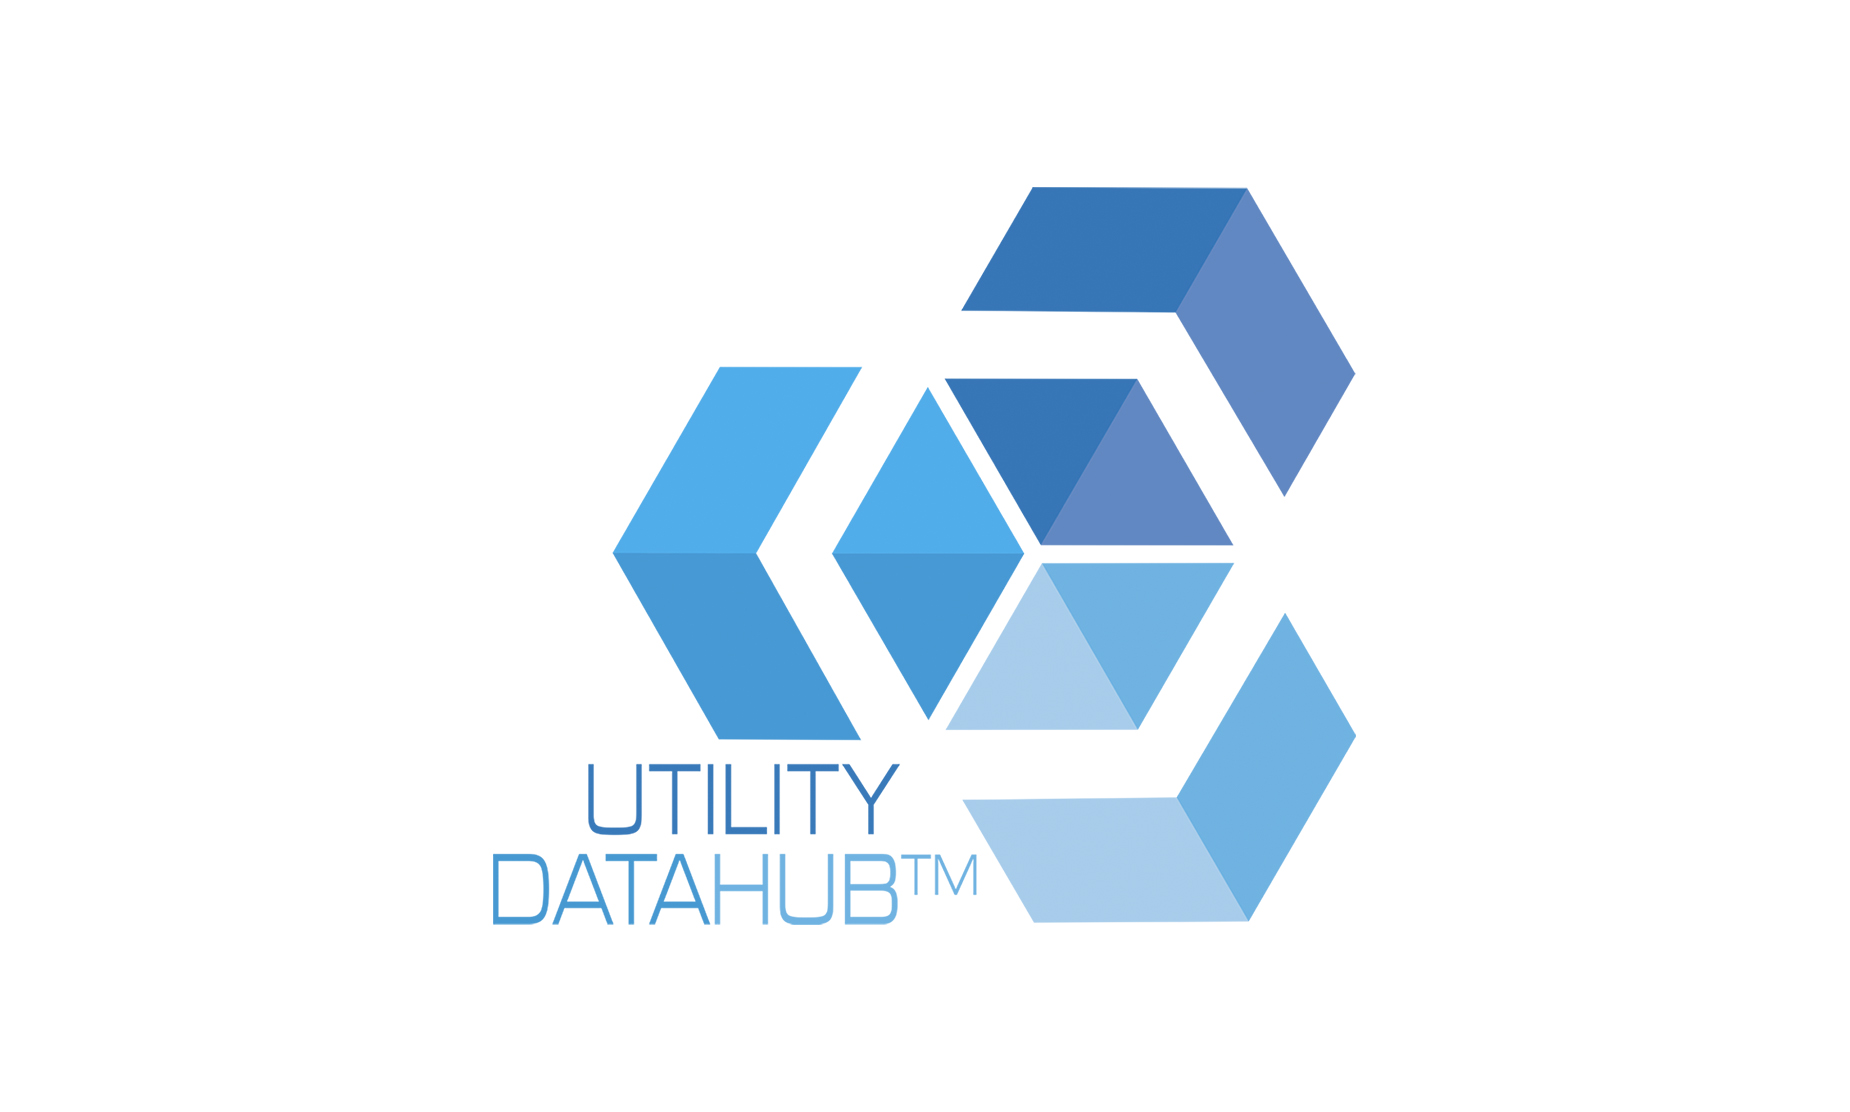 Utility DataHub